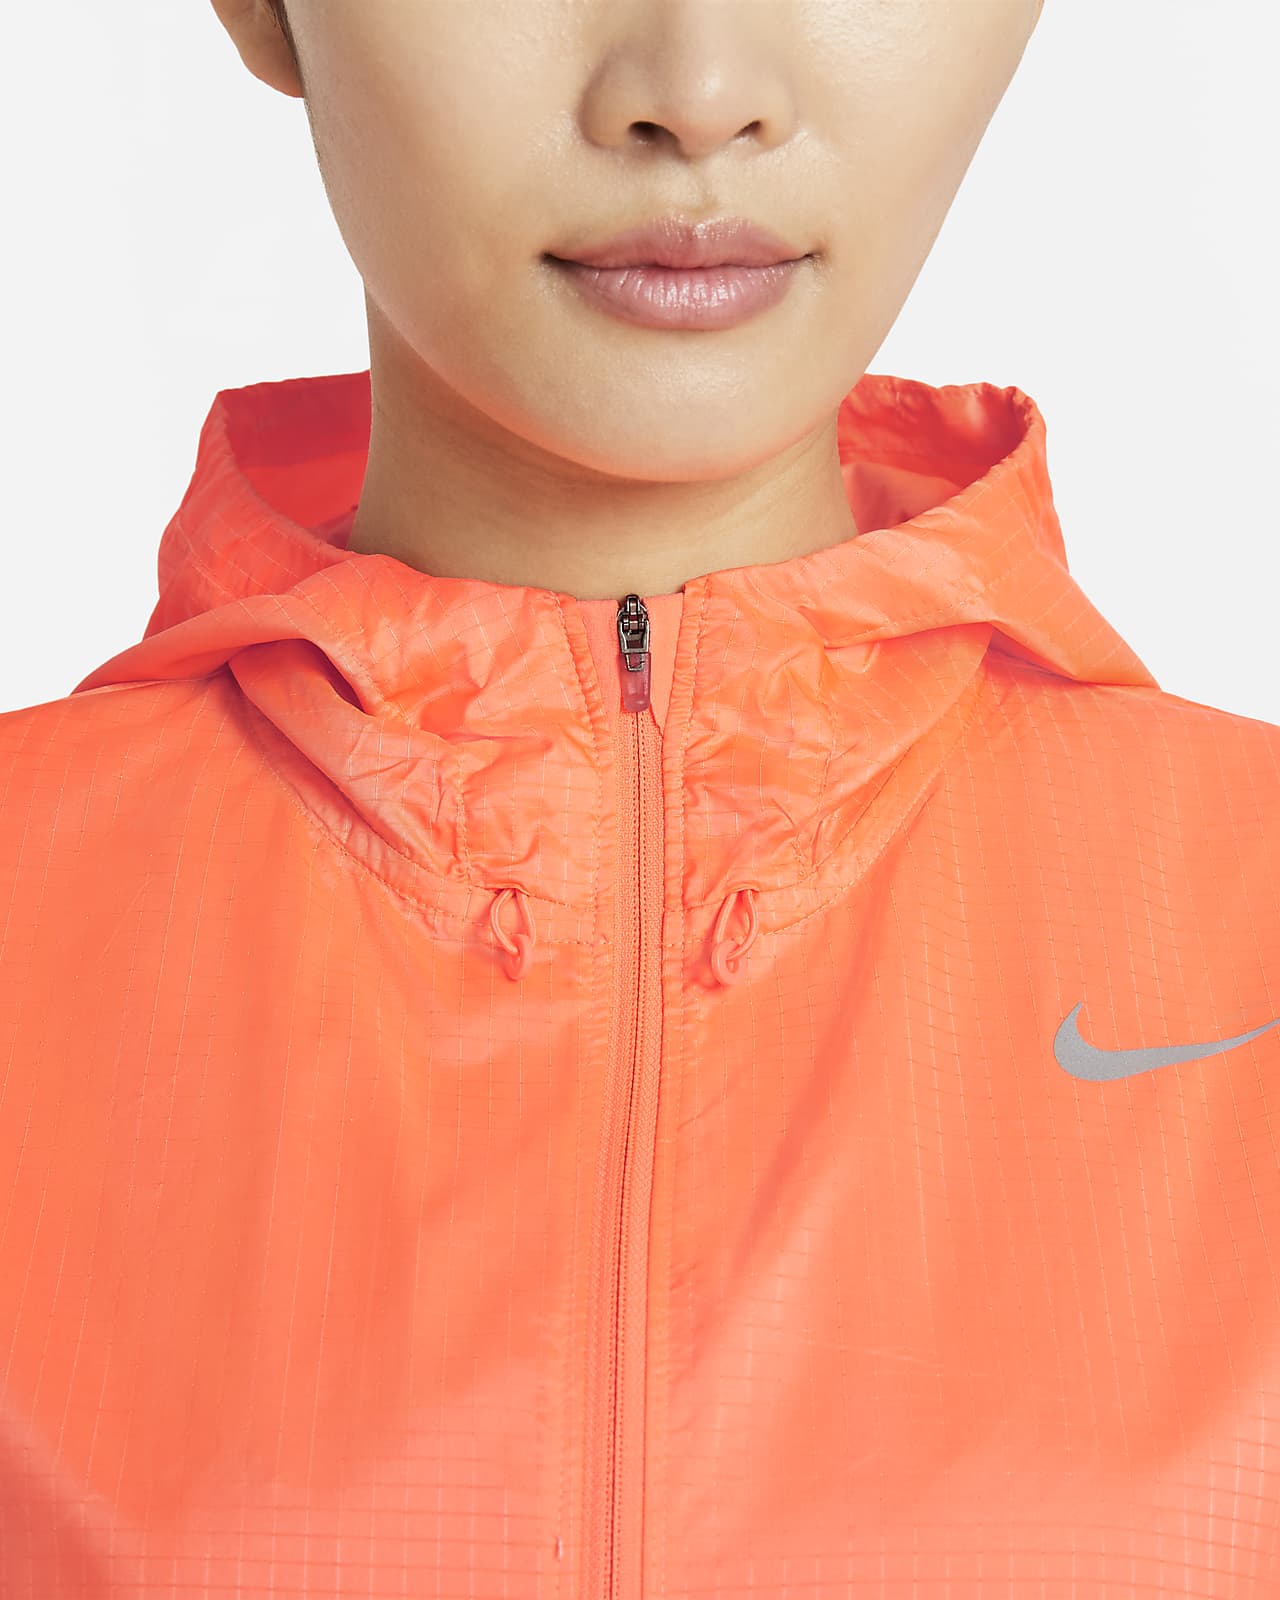 nike essential women's running jacket